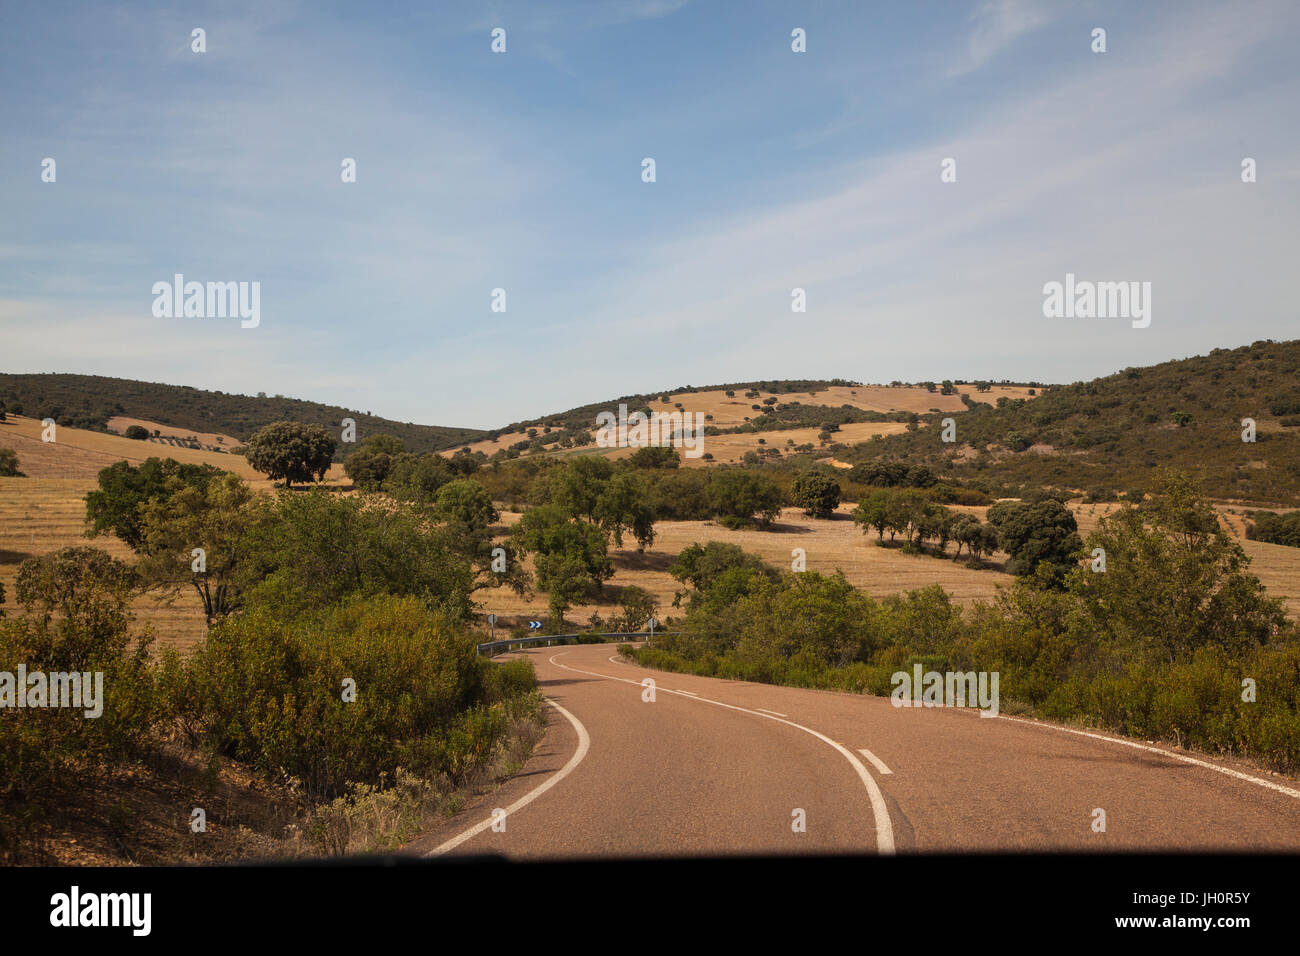 The arid landscape of the Castilla-La Mancha region of central Spain Stock Photo